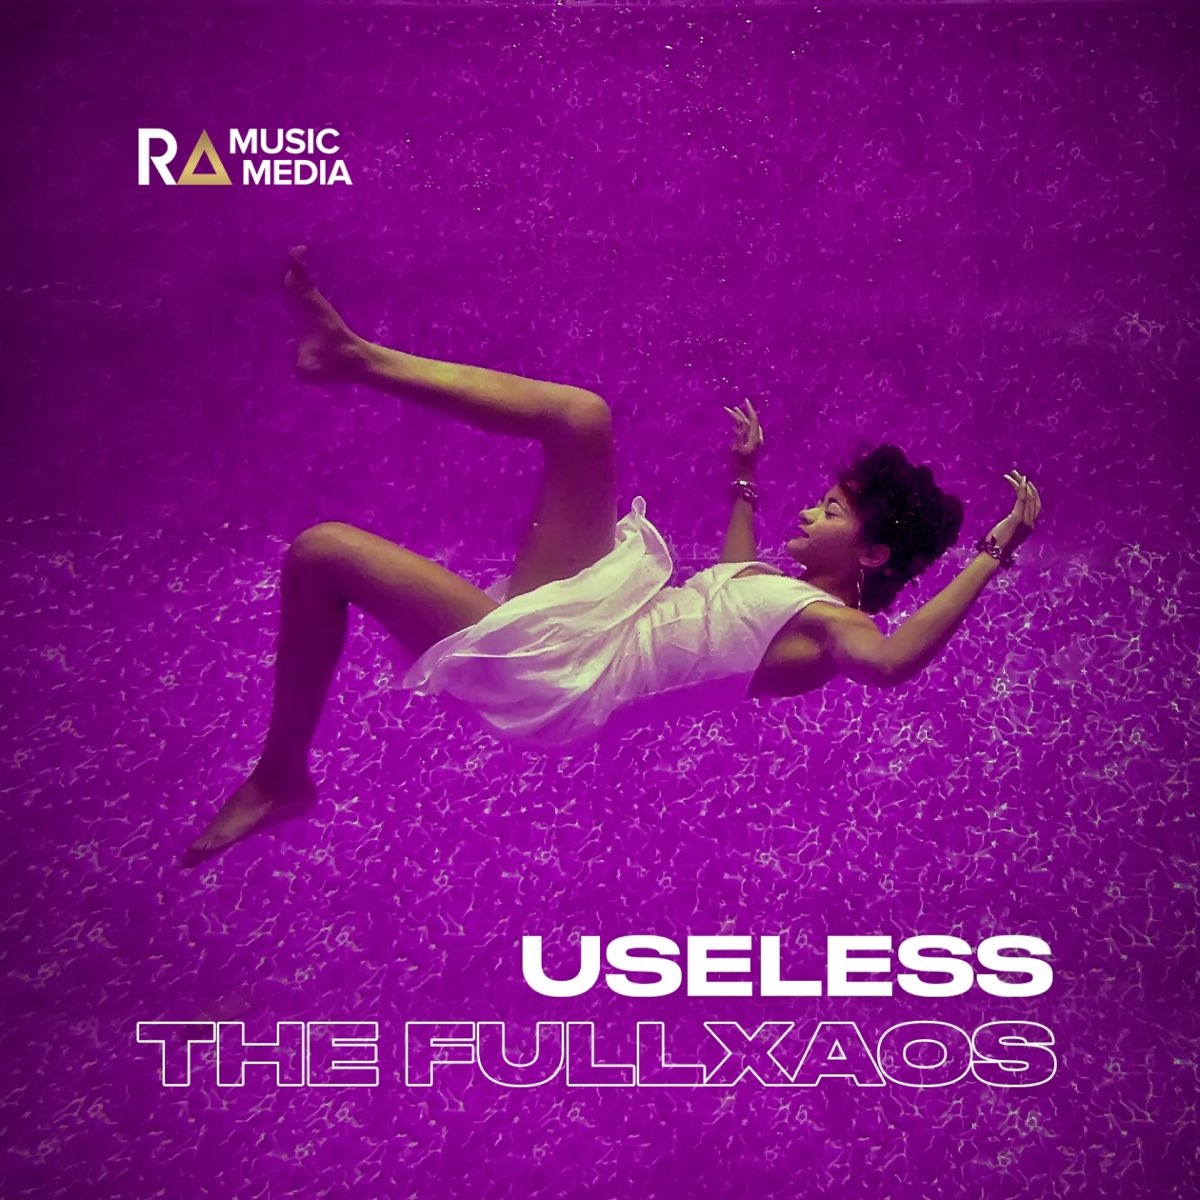 Музыку бесполезно. Обложка альбома useless. Бесполезно альбом. The FULLXAOS - Cruzin. Песня useless.